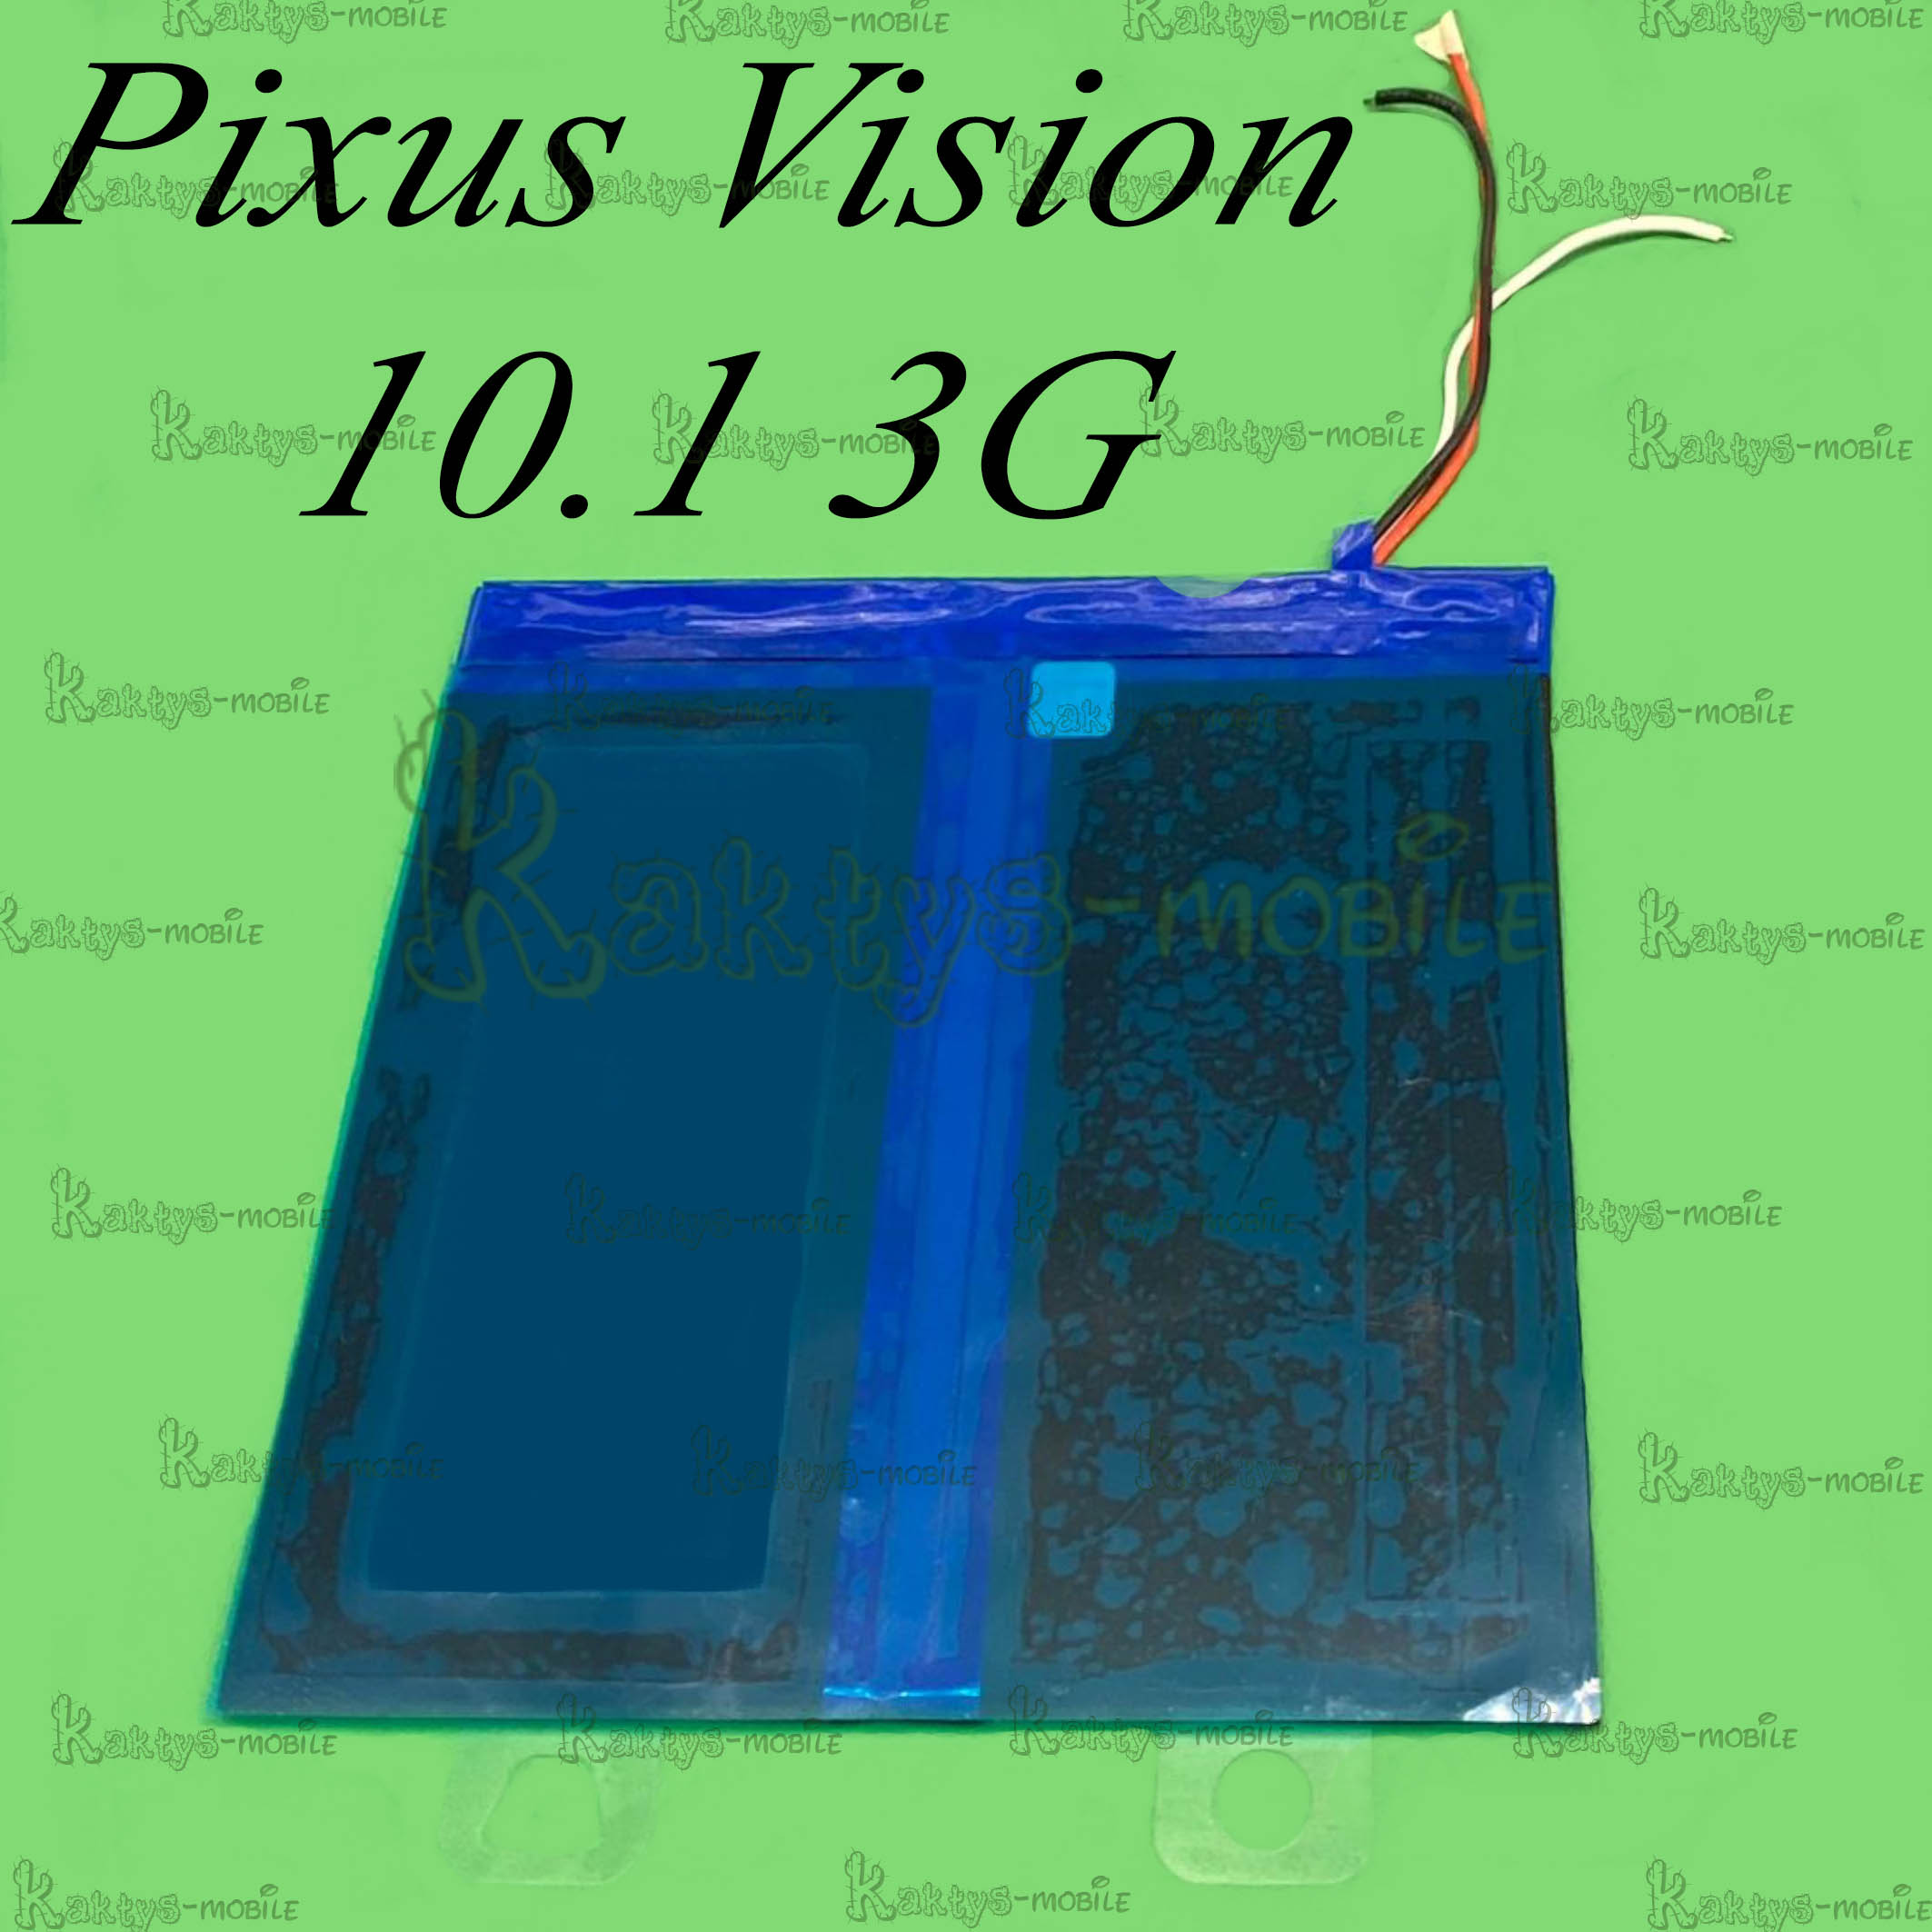 Аккумуляторная батарея, элемент питания, АКБ для планшета Pixus Vision 10.1 3G (Пиксус Визион 10.1 3Г).